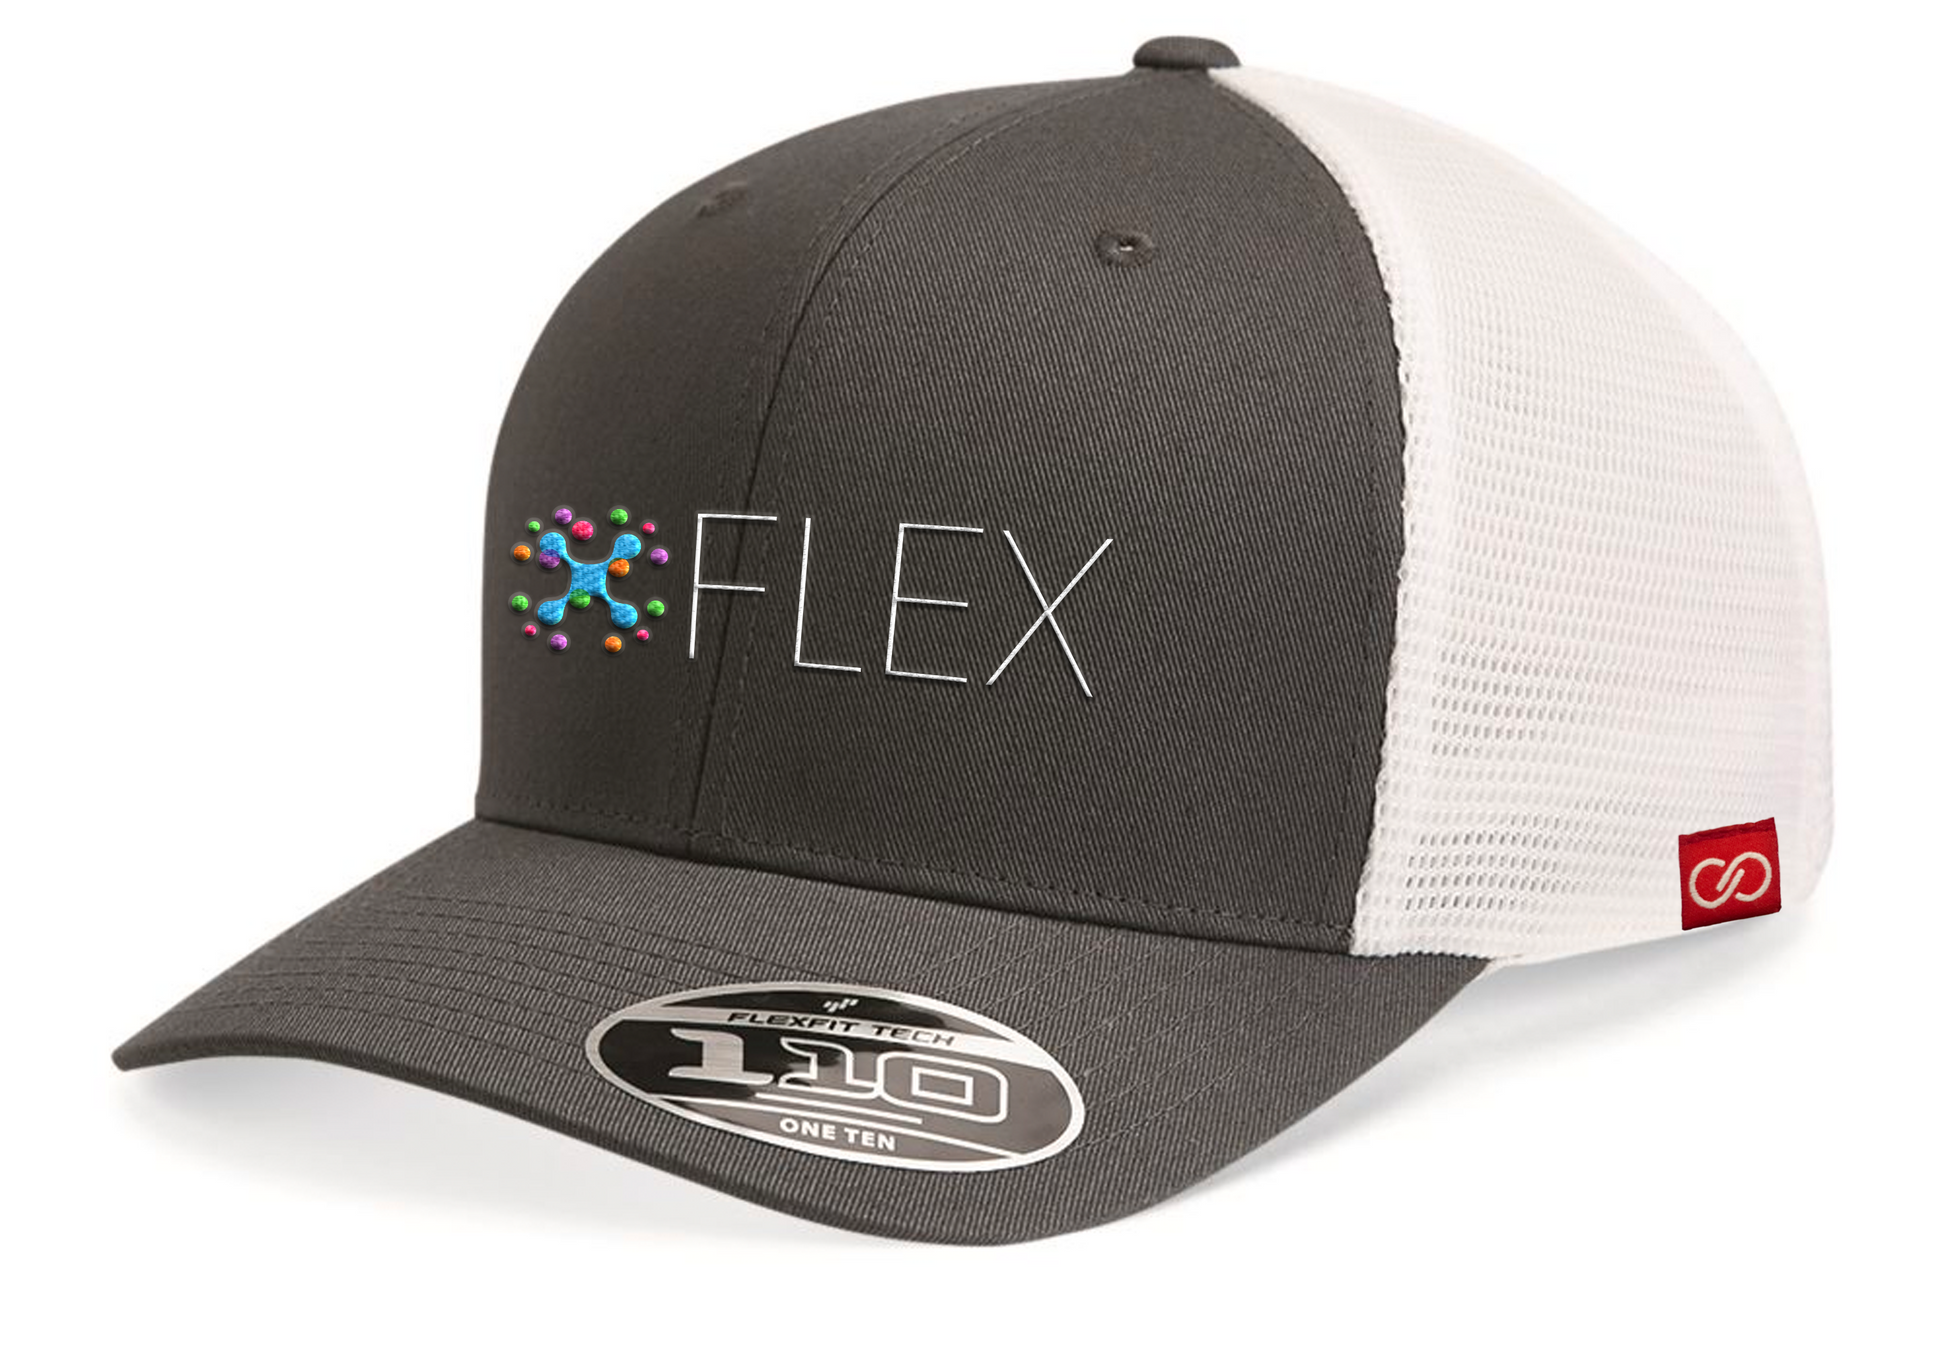 FLEX charcoal gray / white – snapback FLEX hat Gear